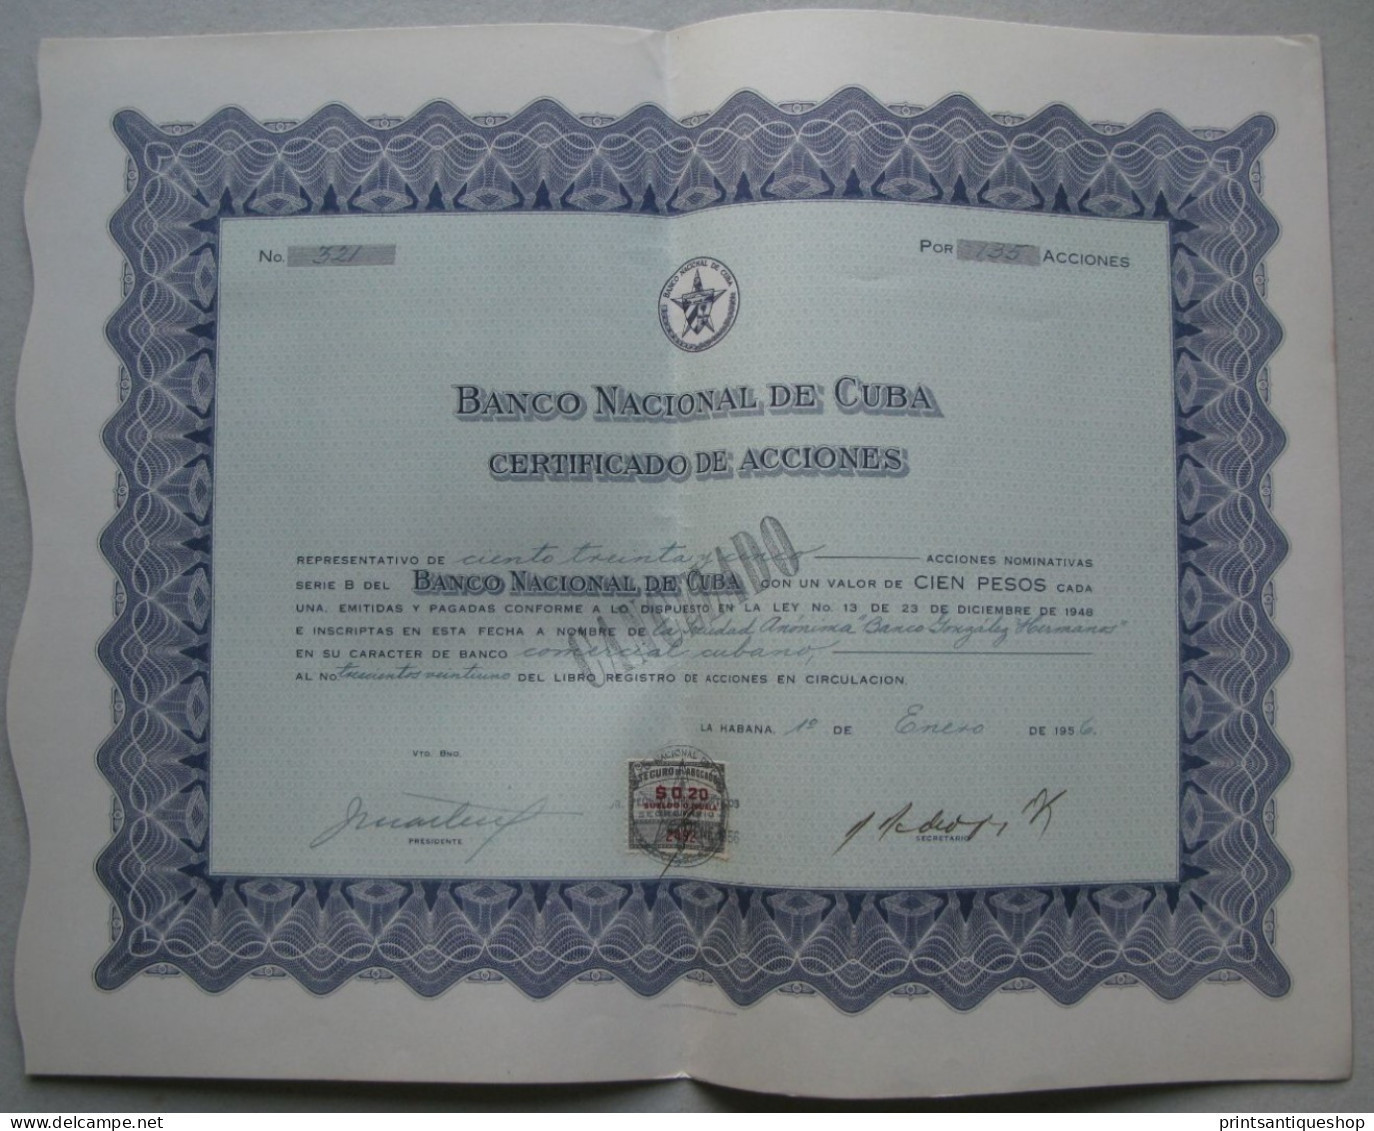 1956 Banco Nacional De Cuba Emprunt Aktie Obligation Bond BONO Certificate $100 Habana Havana In Spanish - Bank & Versicherung